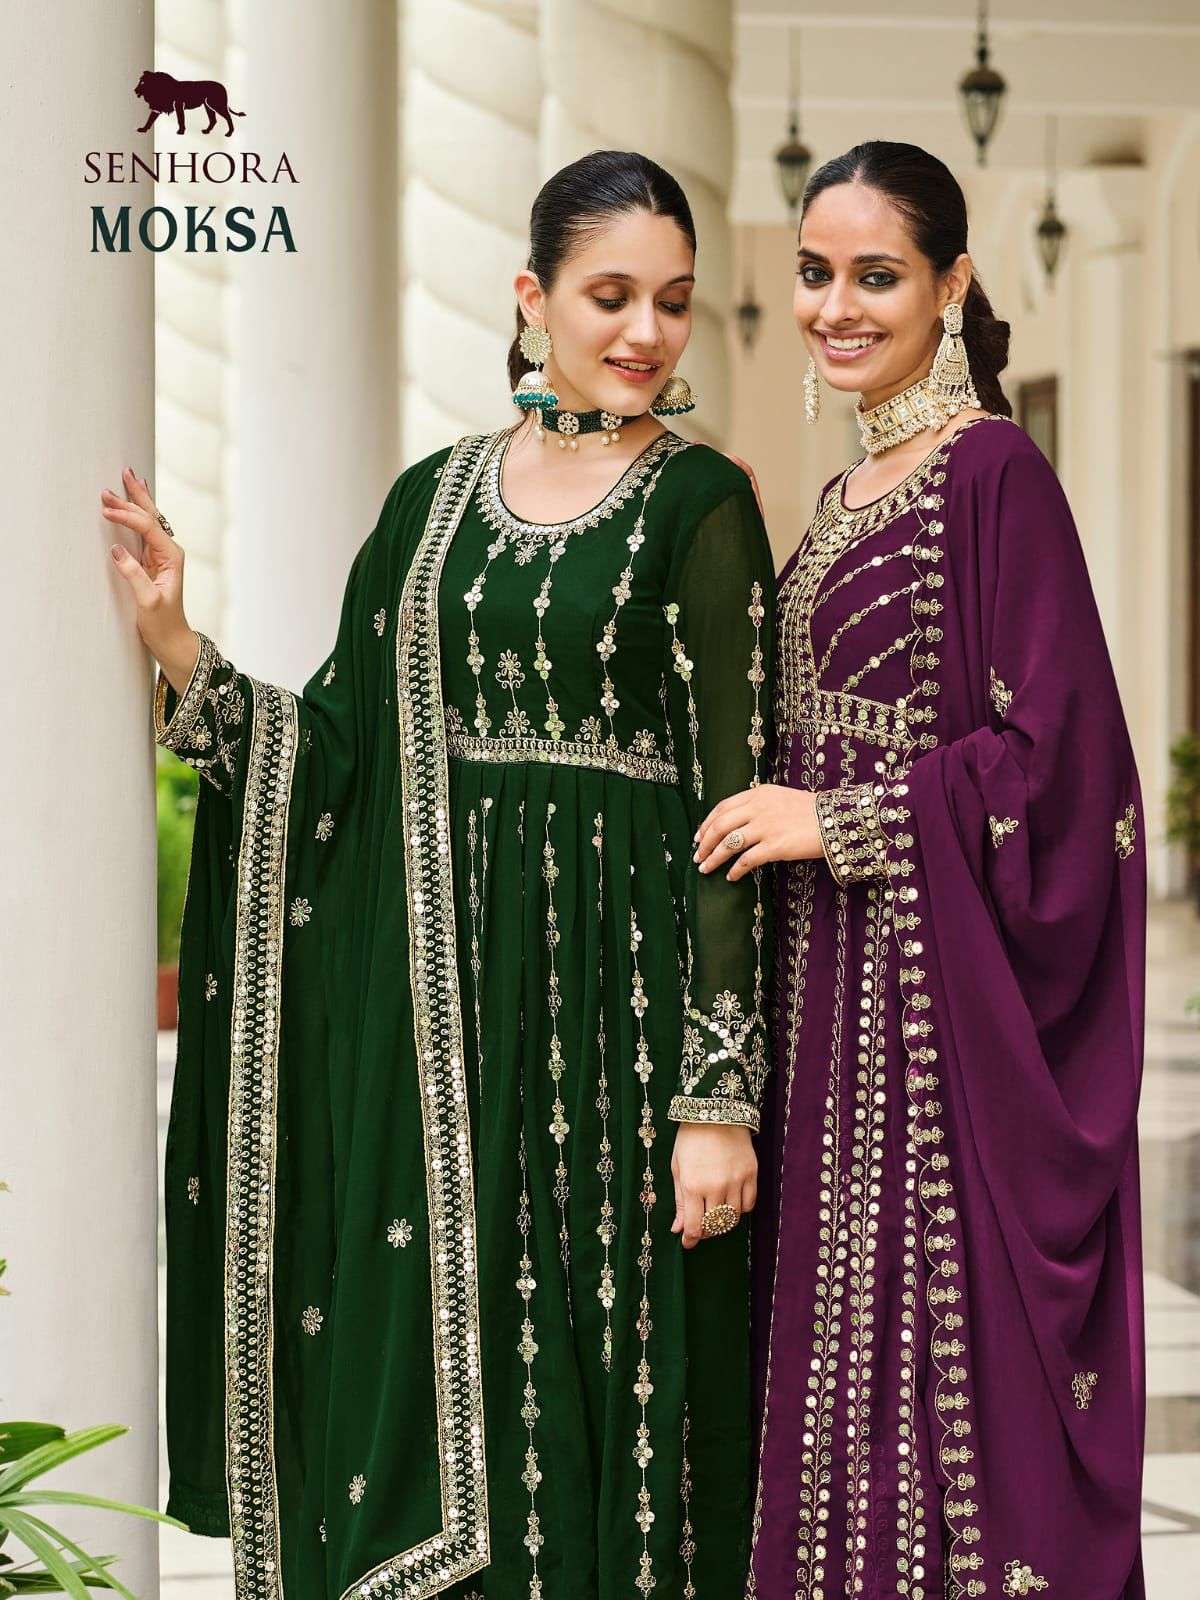 senhora dresses moksa 2068-2071 series party wear georgette salwar suits pratham exports surat